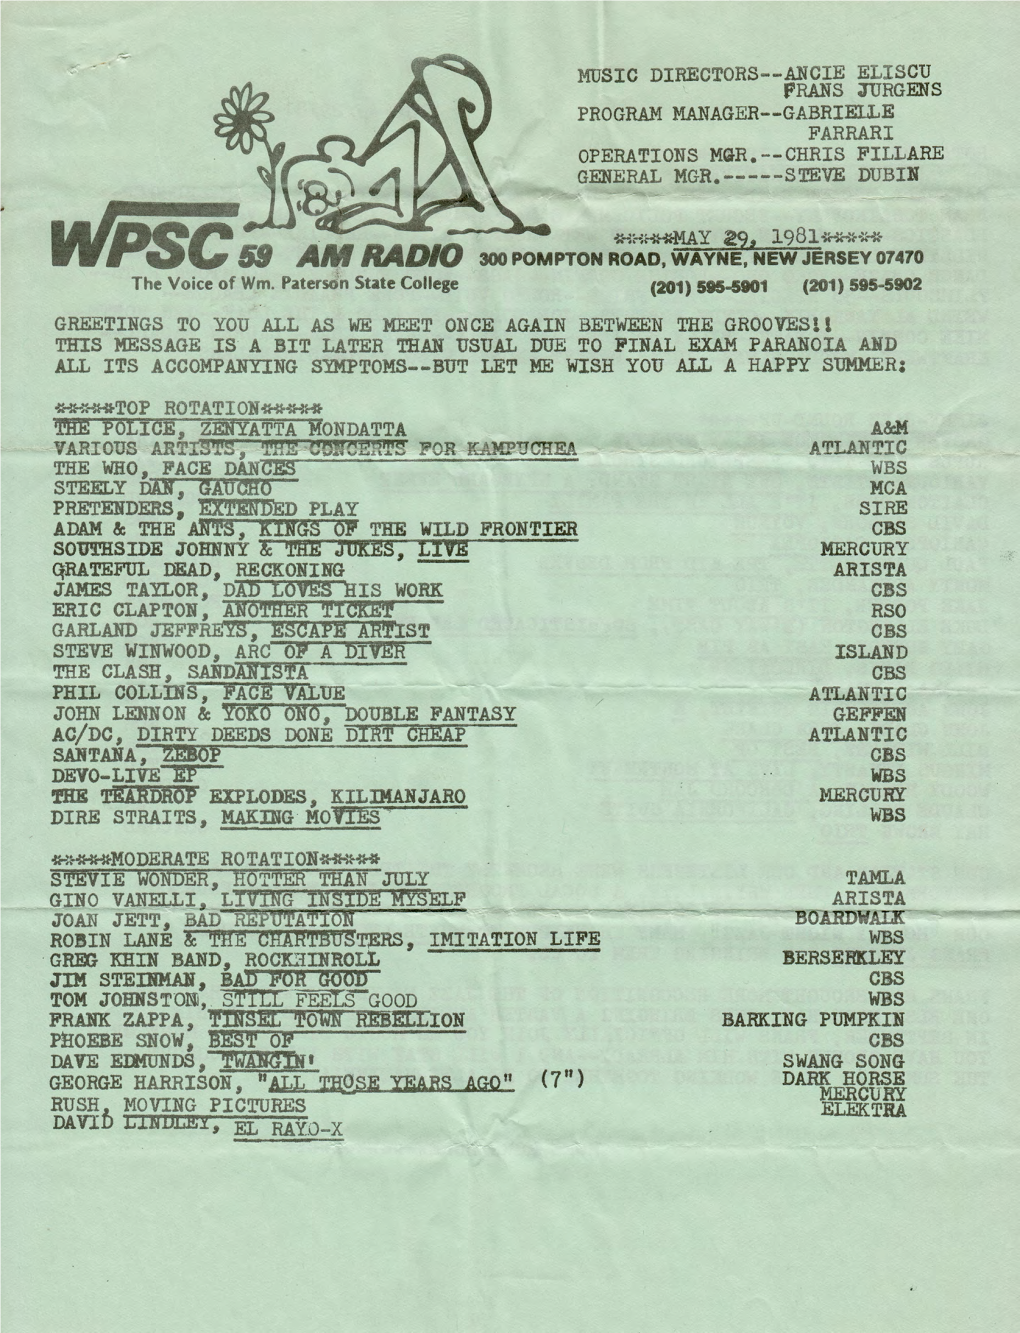 WPSC 59 AM Radio Playlist, May 29, 1981